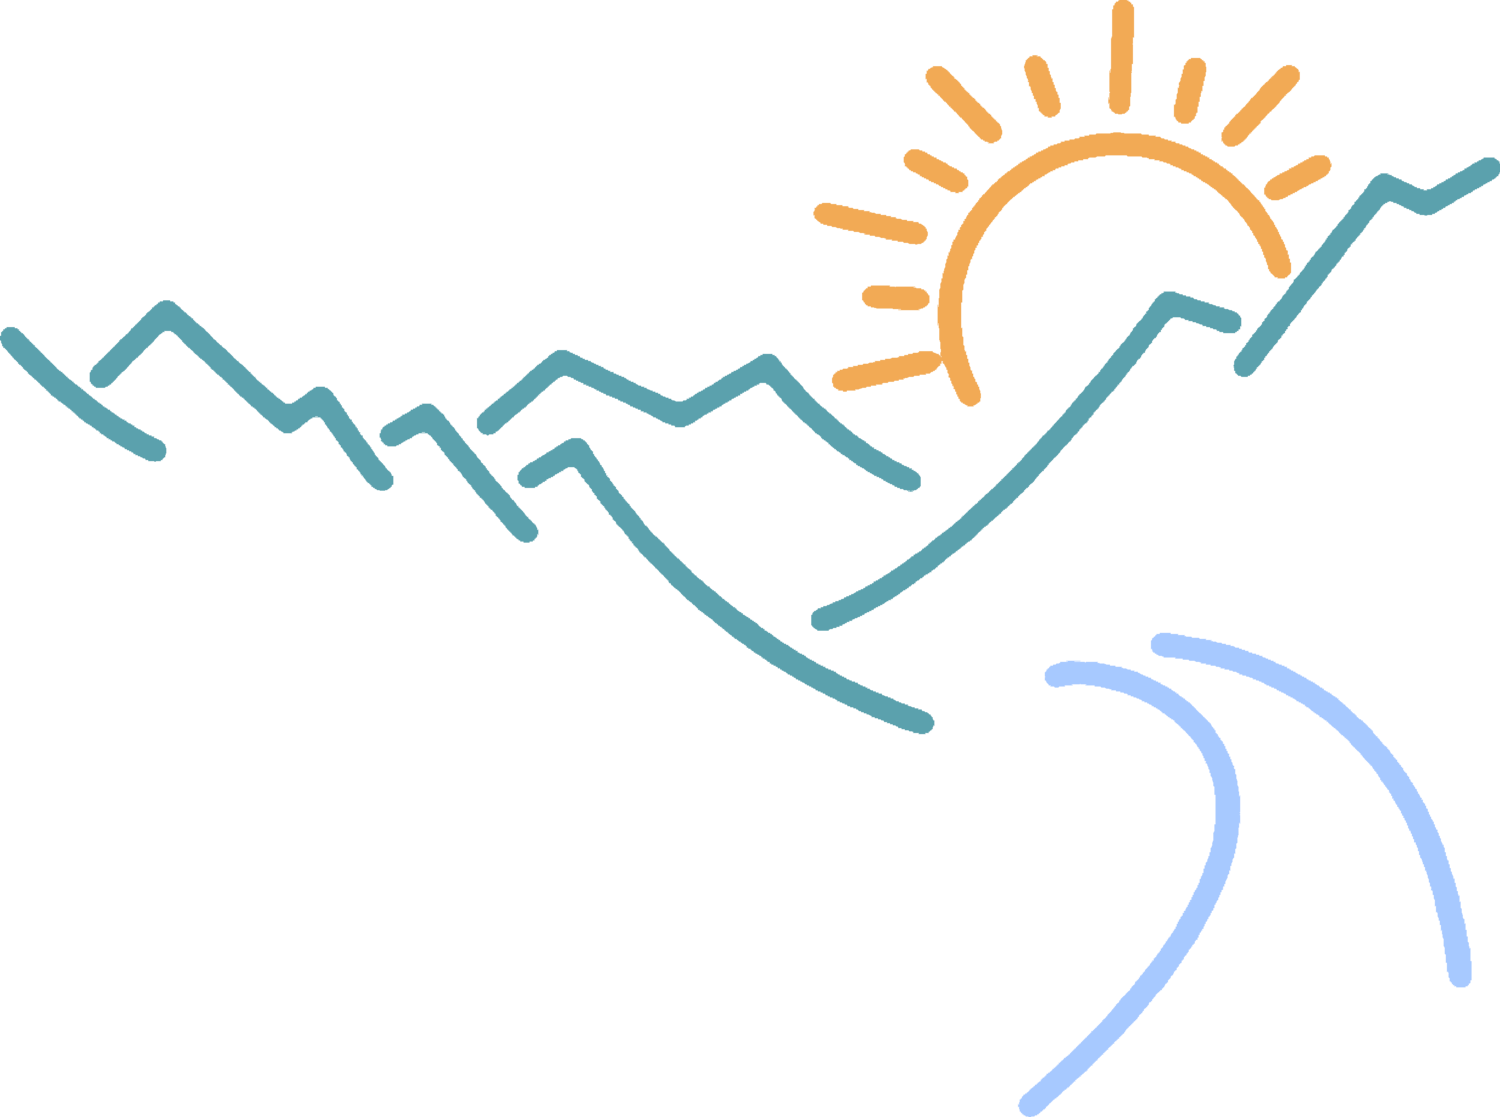 Camp Fletcher